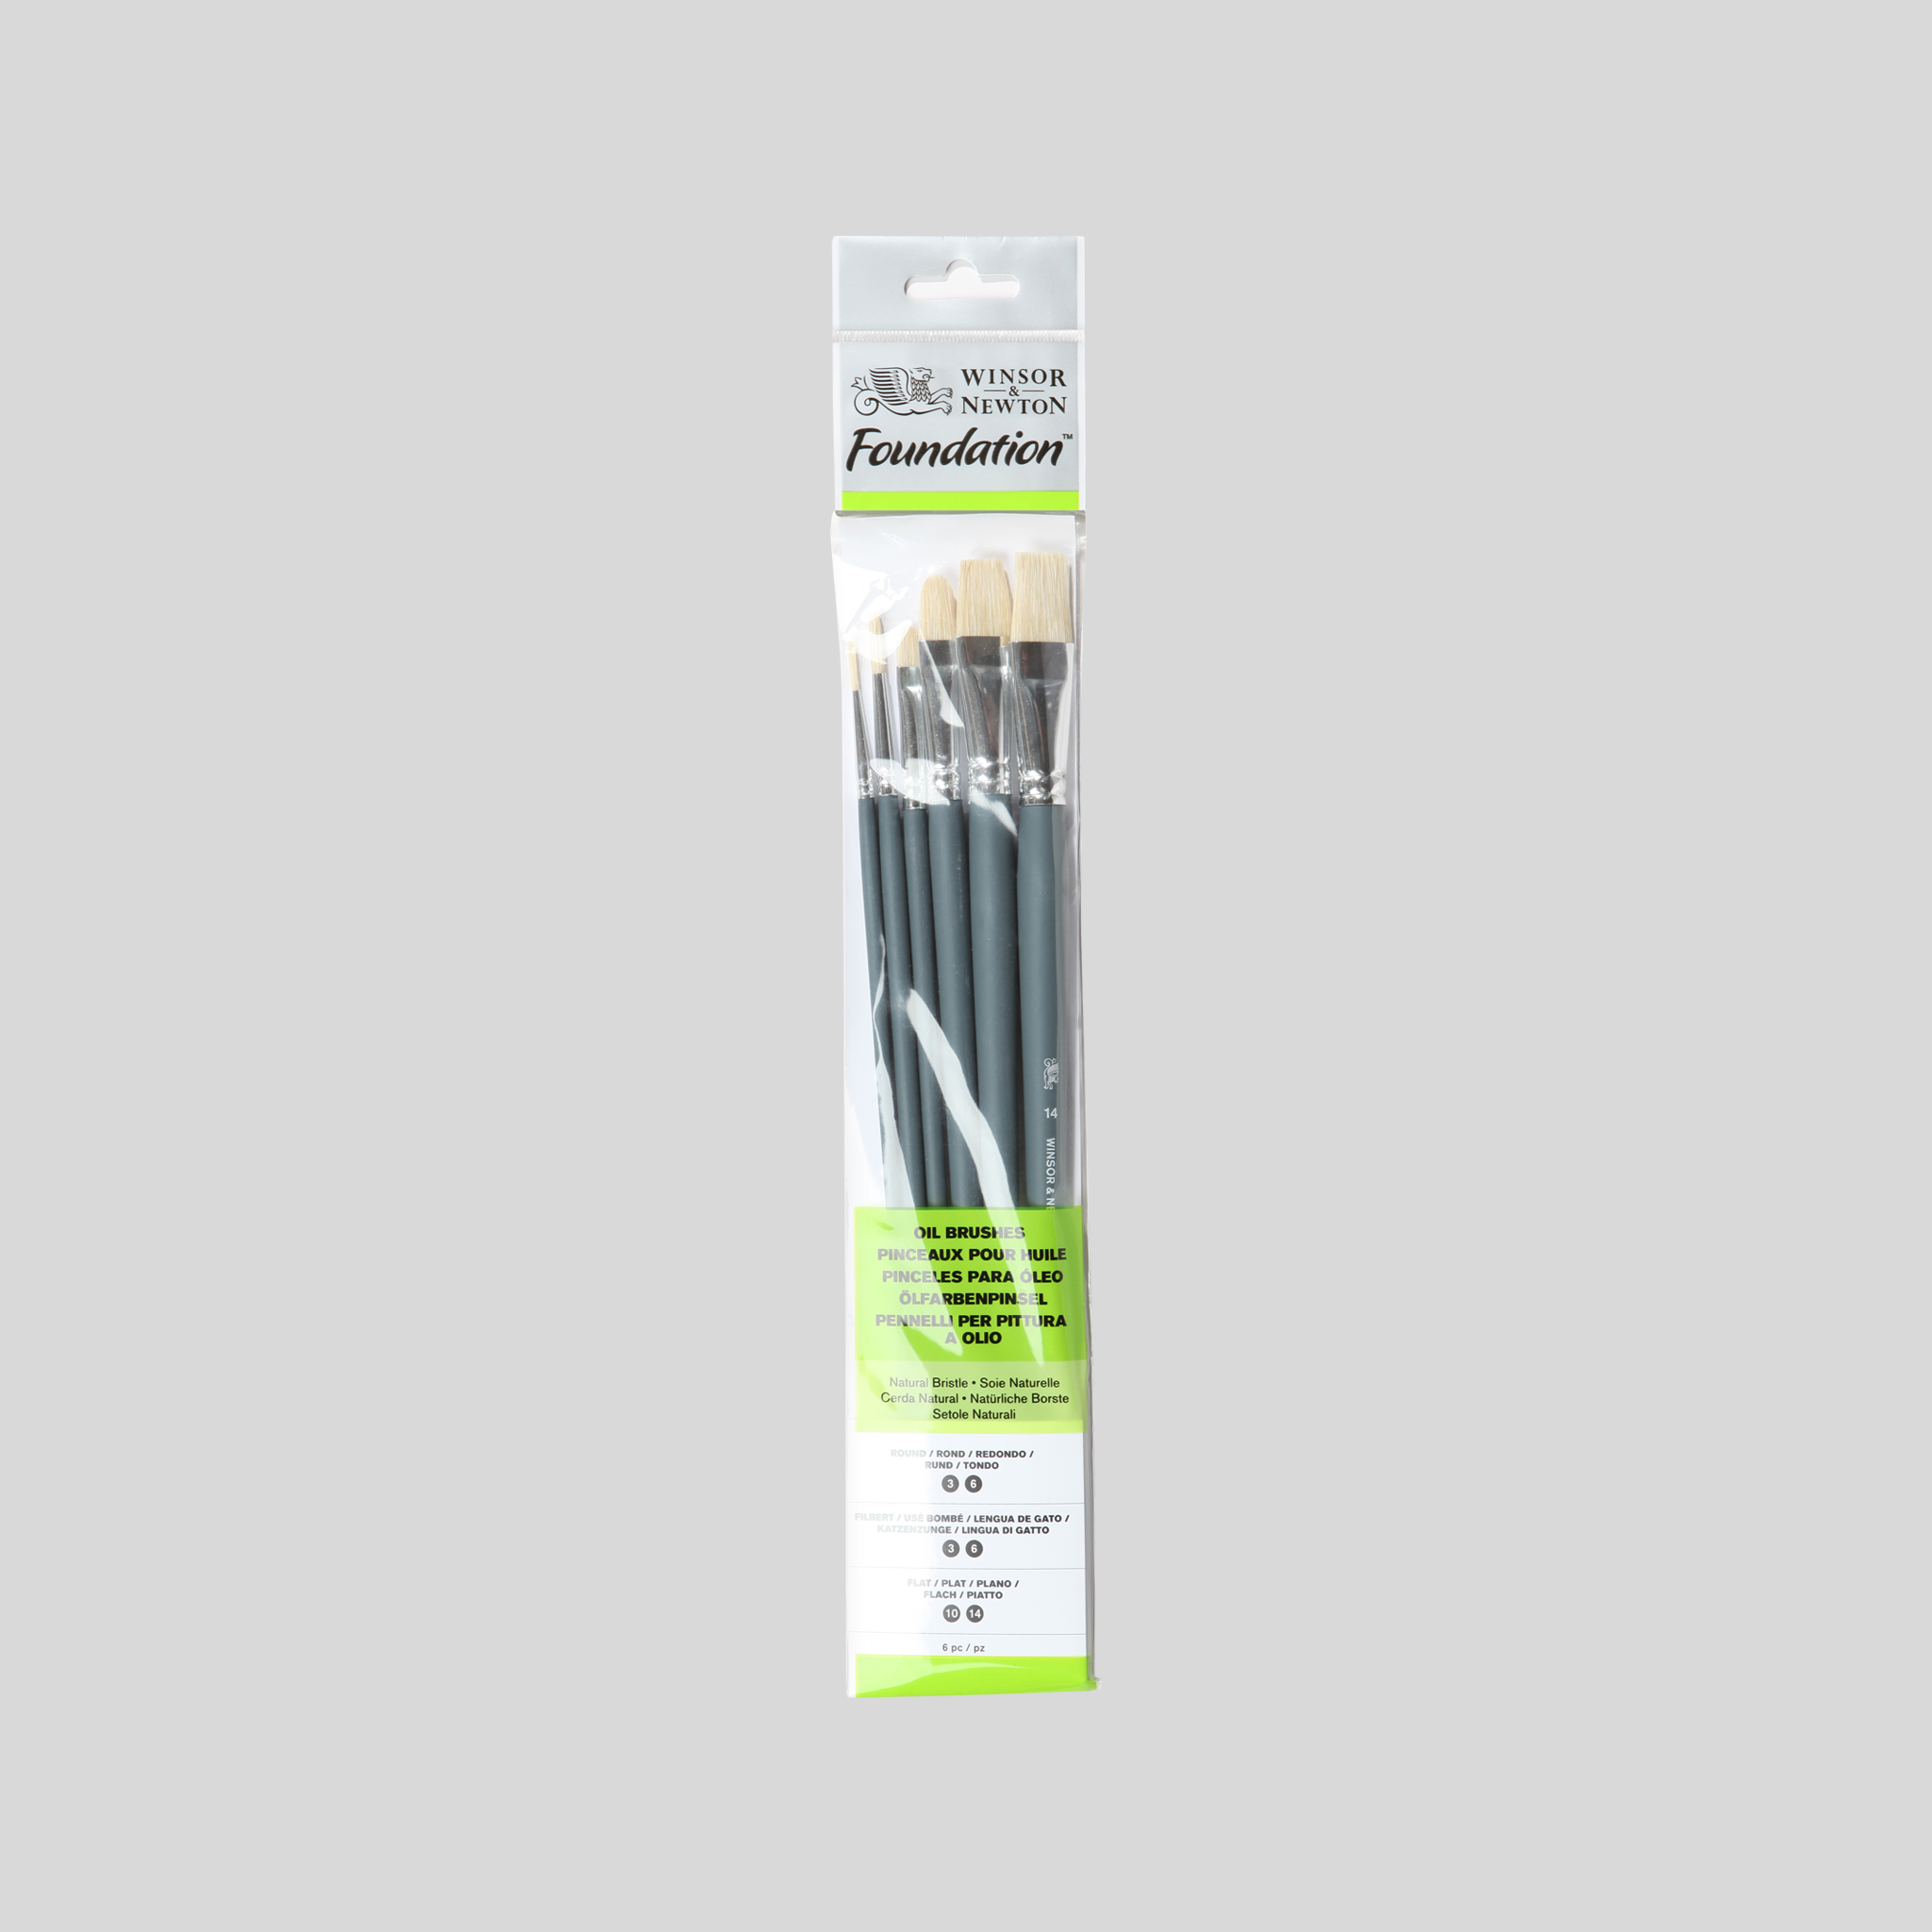 Winsor & Newton Foundation Watercolour Brush Set, Short Handle, Round Flat  & Filbert, 6 Pack